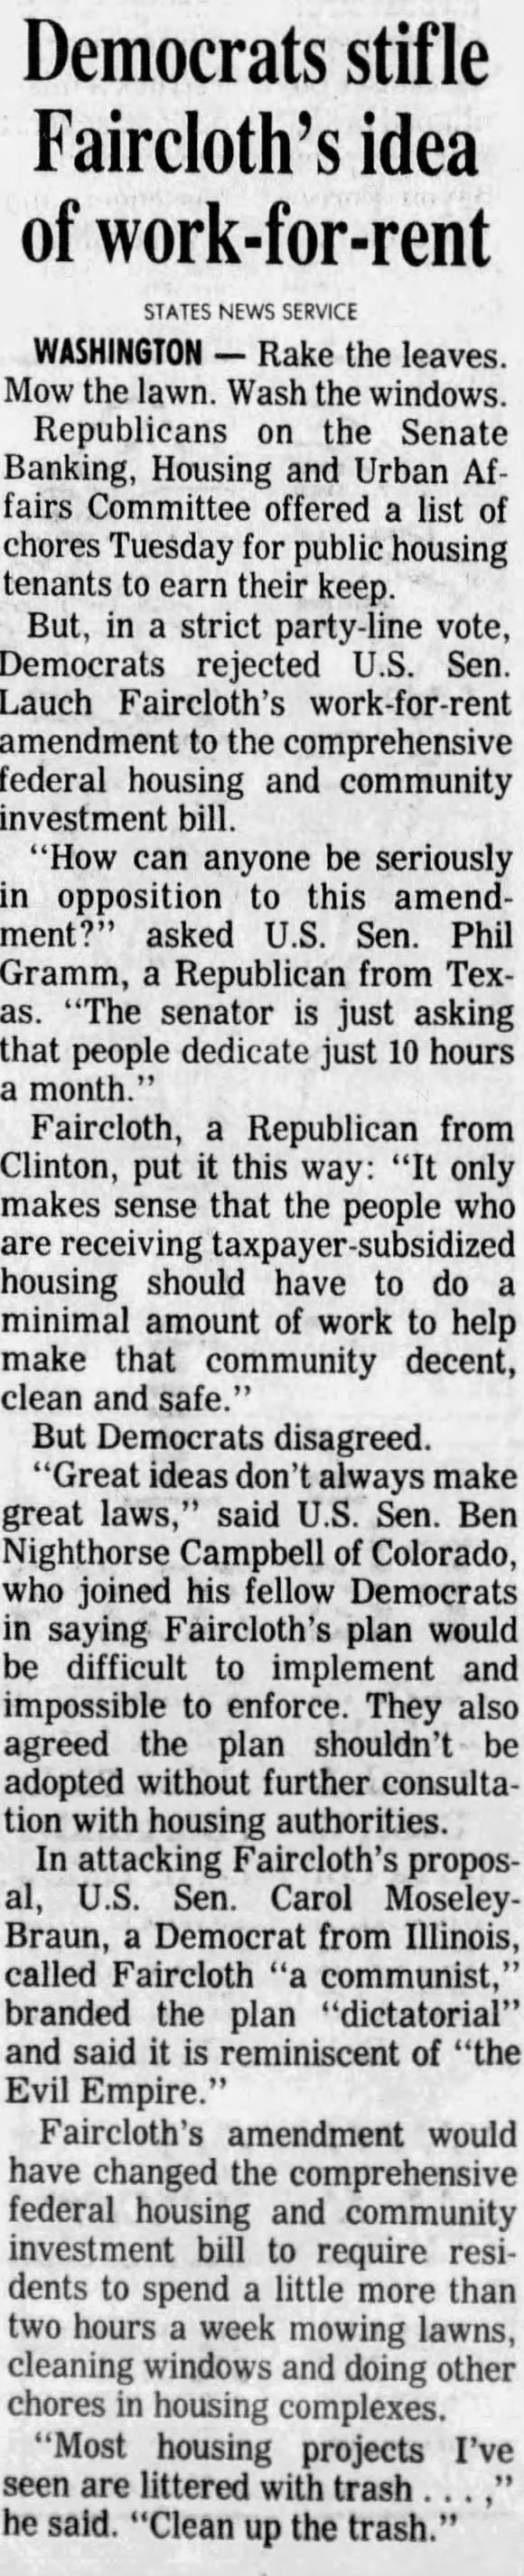 Democrats stifle Faircloth's idea of work-for-rent